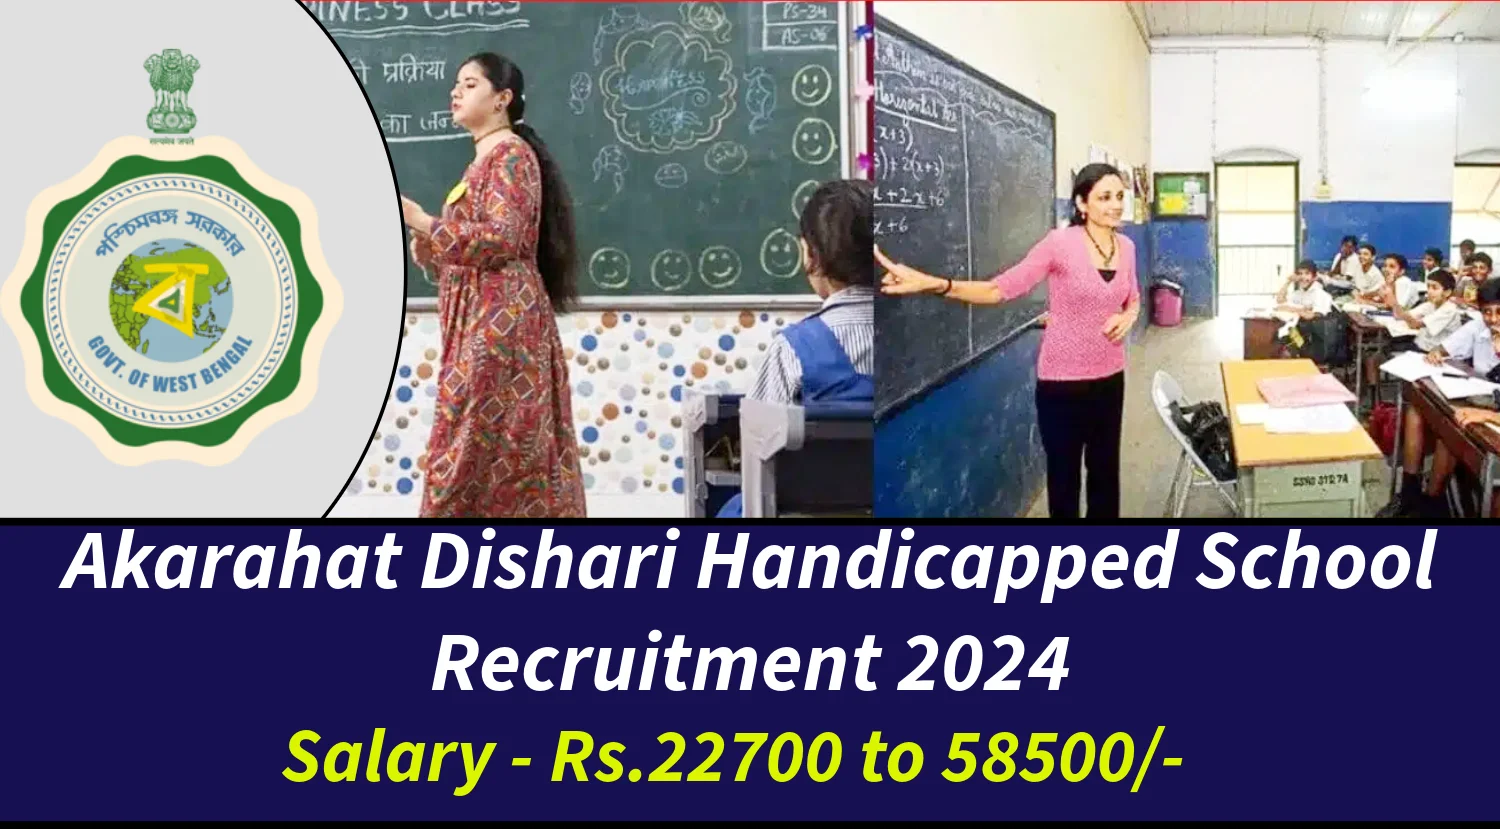 Akarahat Dishari Handicapped School Recruitment 2024 for Teacher Posts